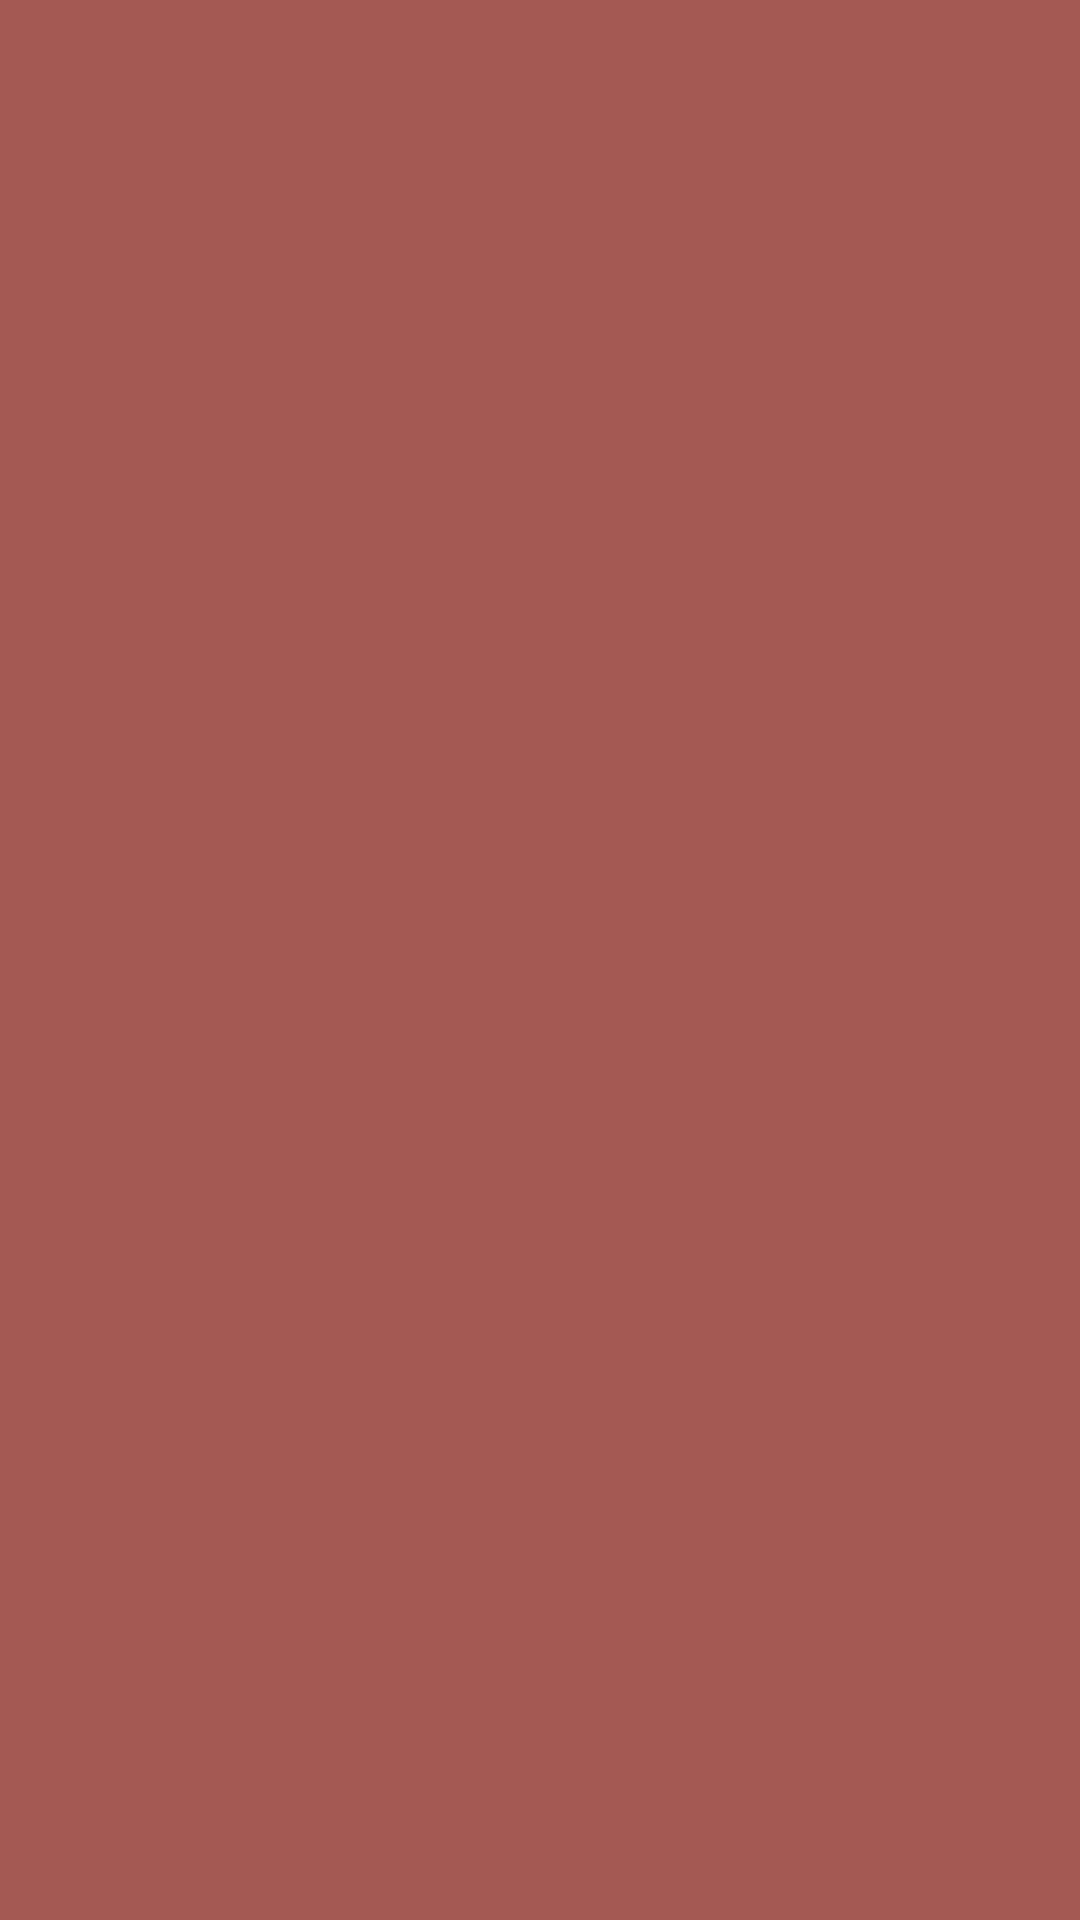 1080x1920 Redwood Solid Color Background